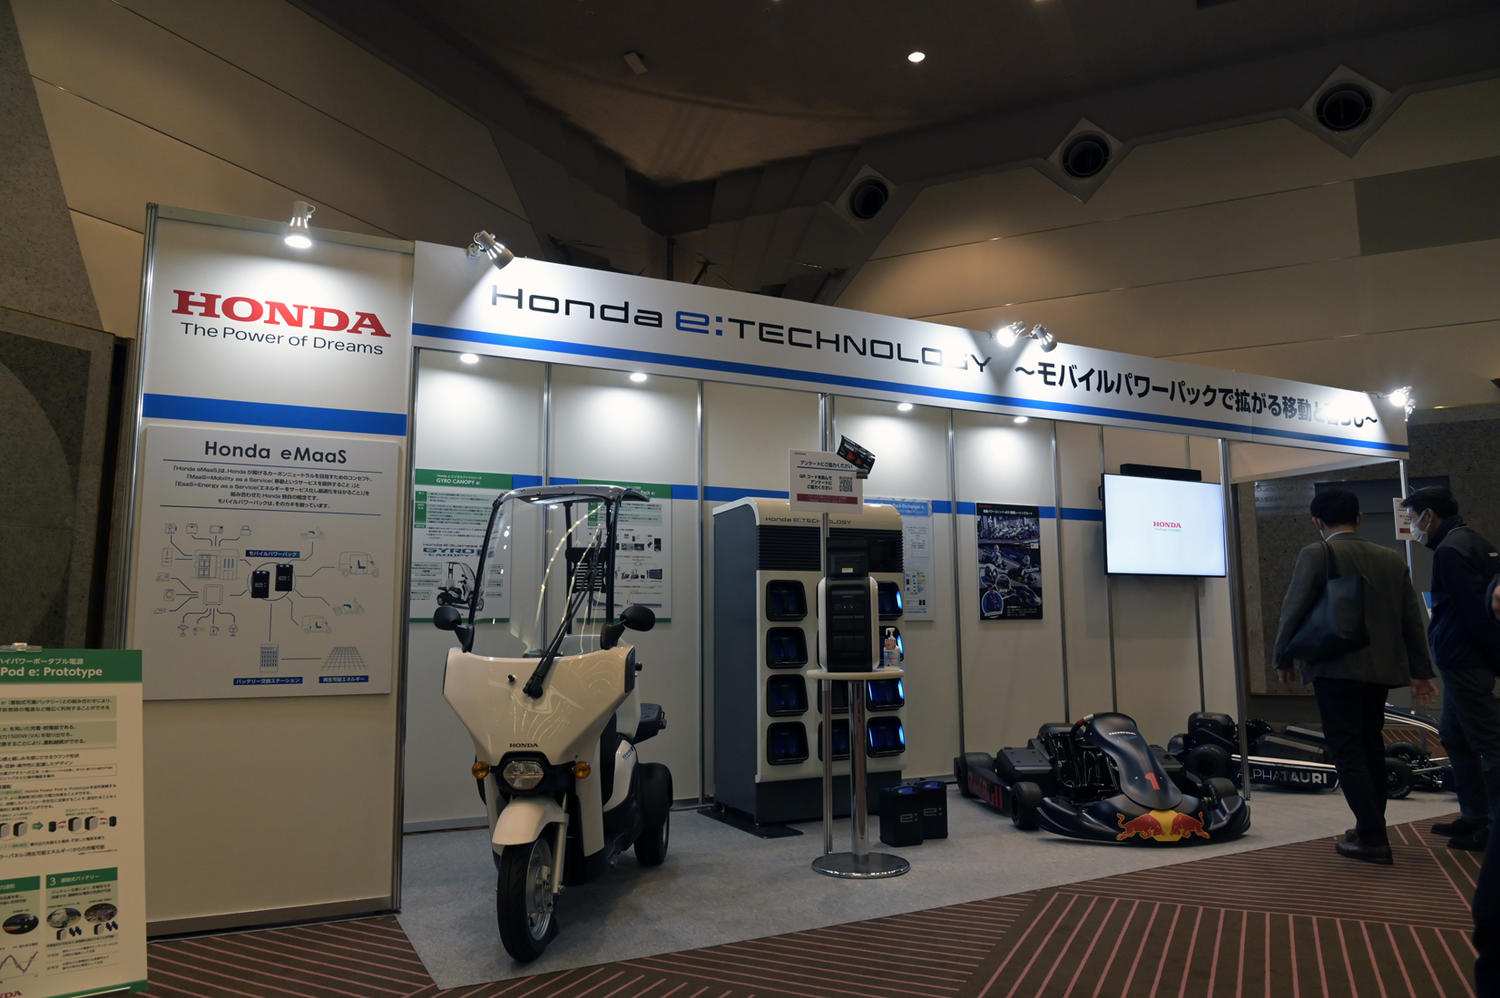 Honda e:TECHNOLOGYブース 〜 画像2